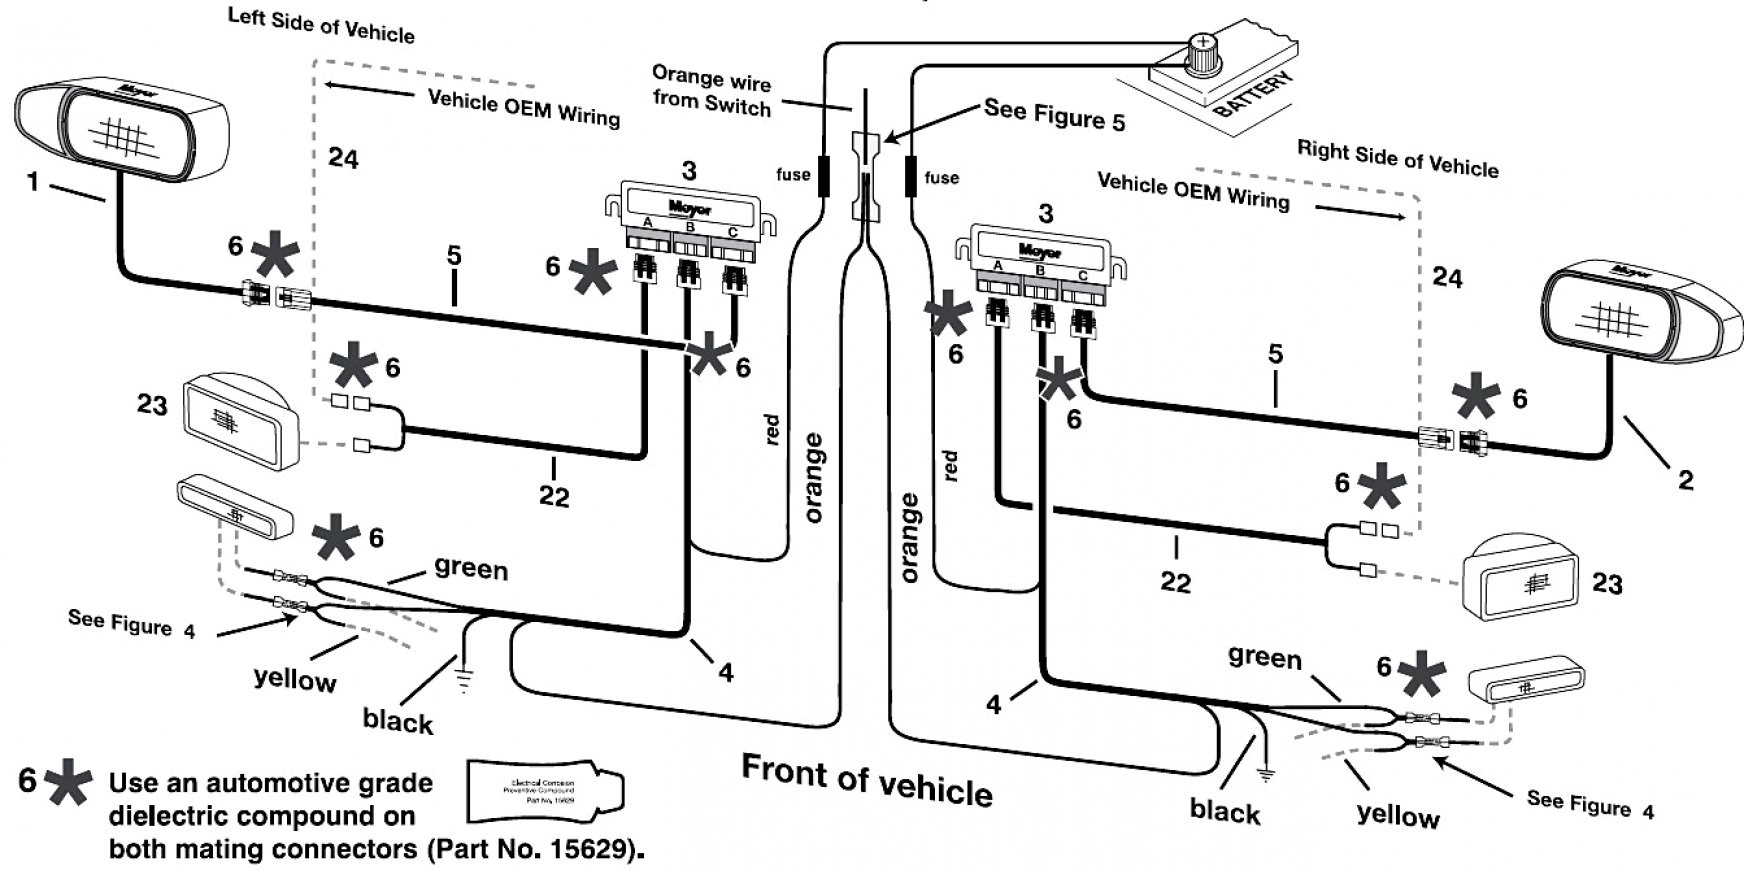 Diagram Western Plow Headlight Wiring Diagram Full Version Hd Quality Wiring Diagram Artinwiring Aikikai Des Lacs Fr